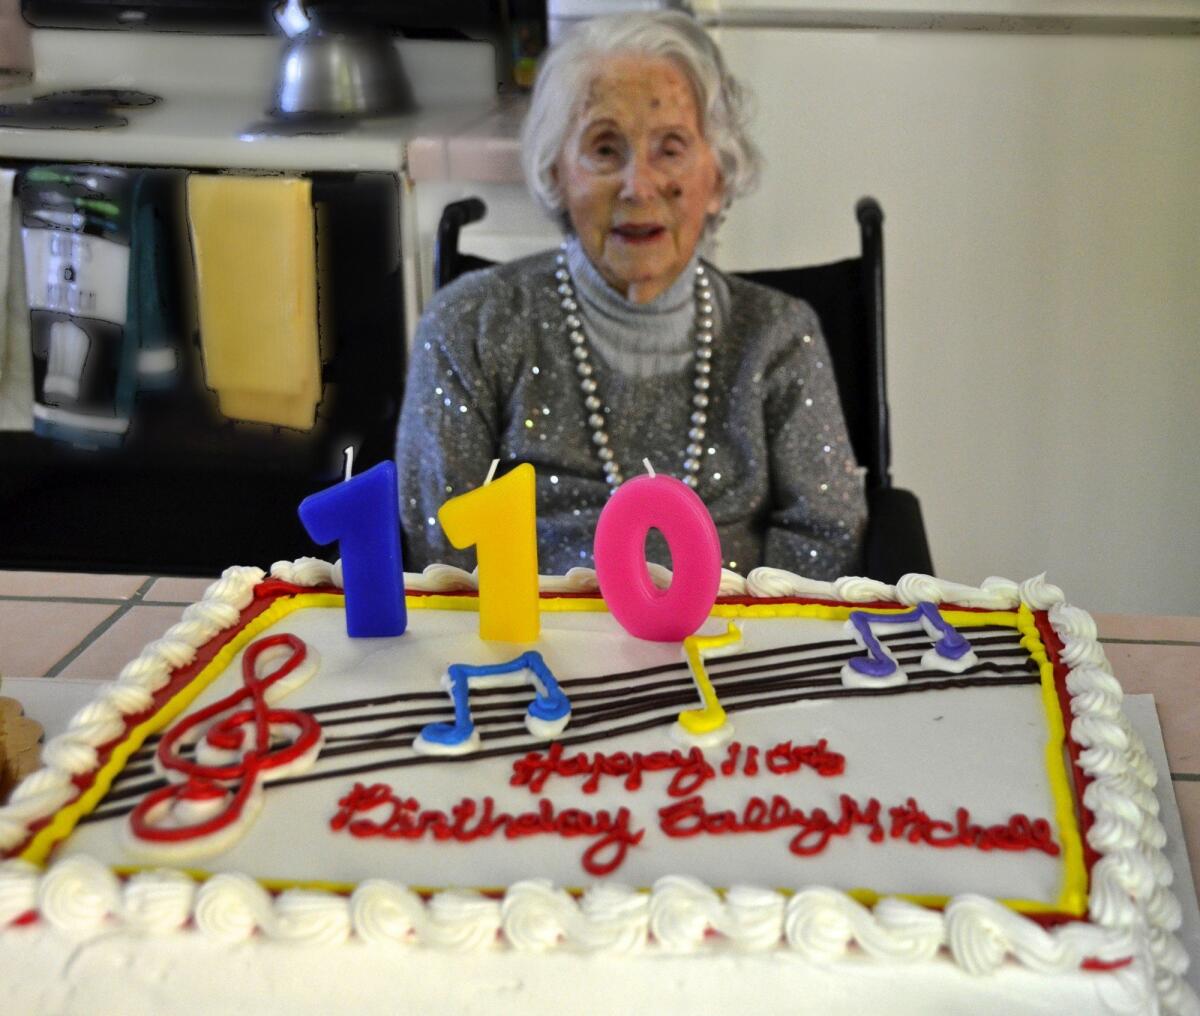 Sally Mitchell admires her cake as she celebrates her 110th birthday on Nov. 25, 2014.